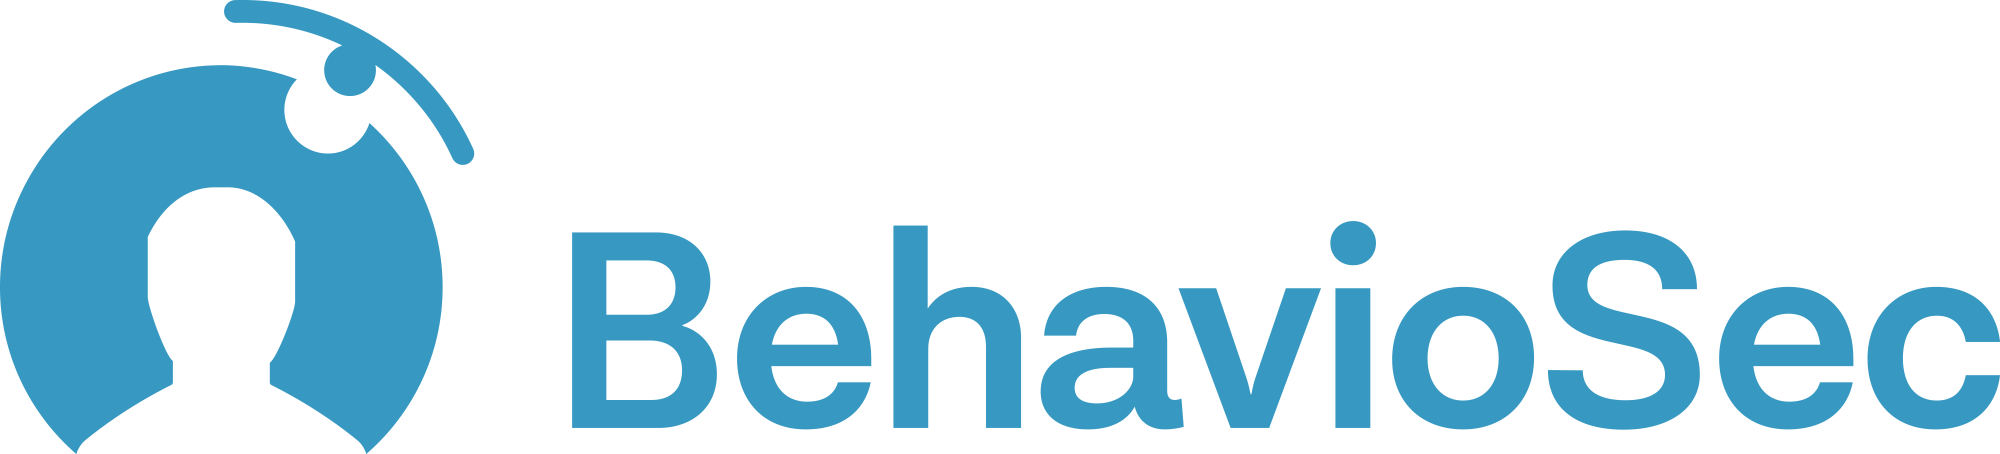 behaviosec-logo-light-blue